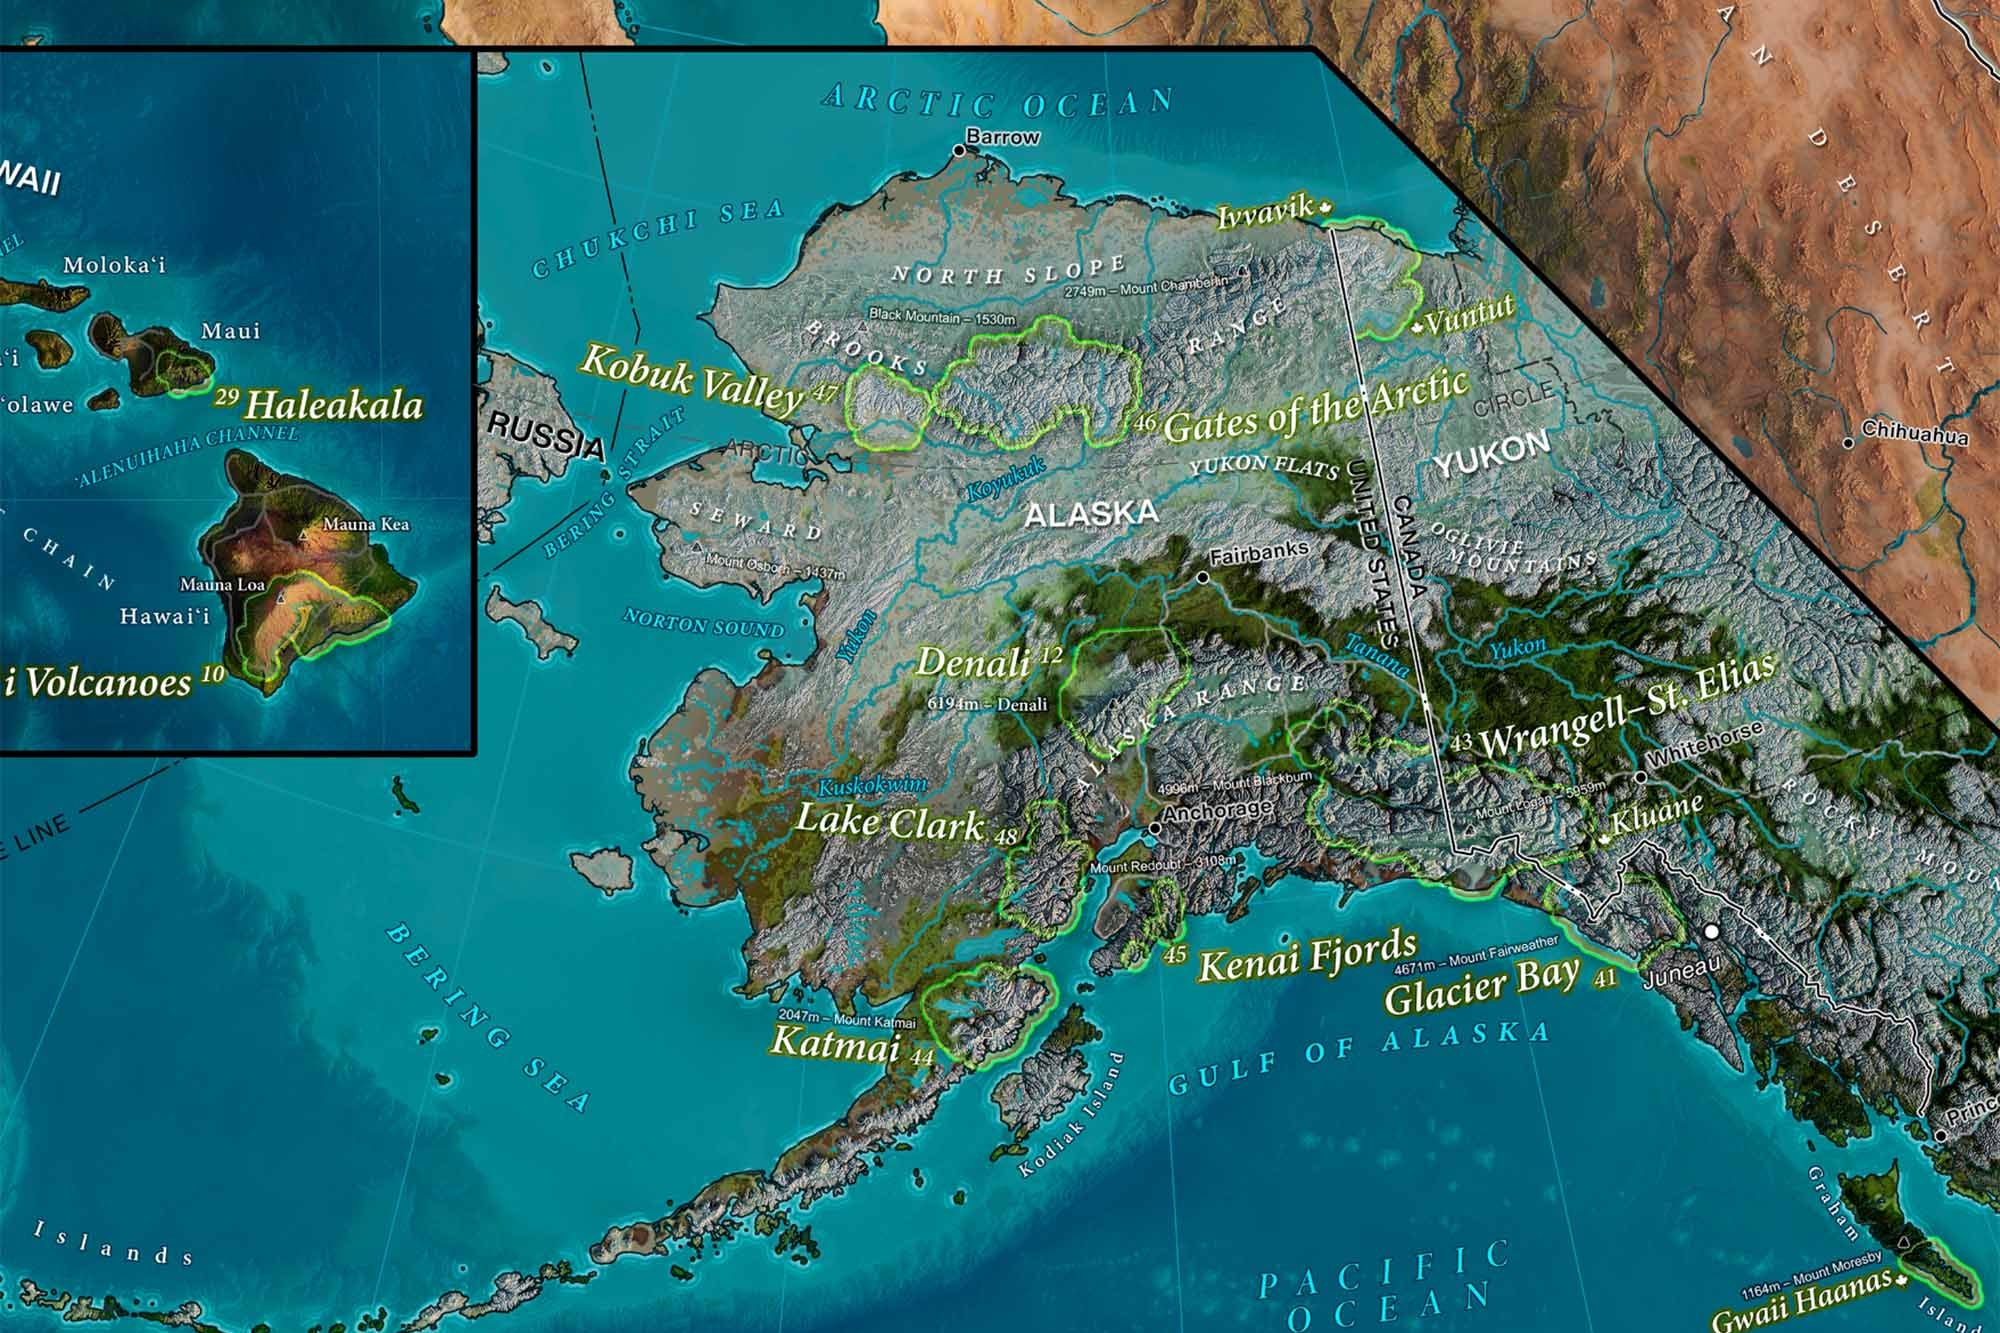 Detailed Alaska on the USA national parks pin map